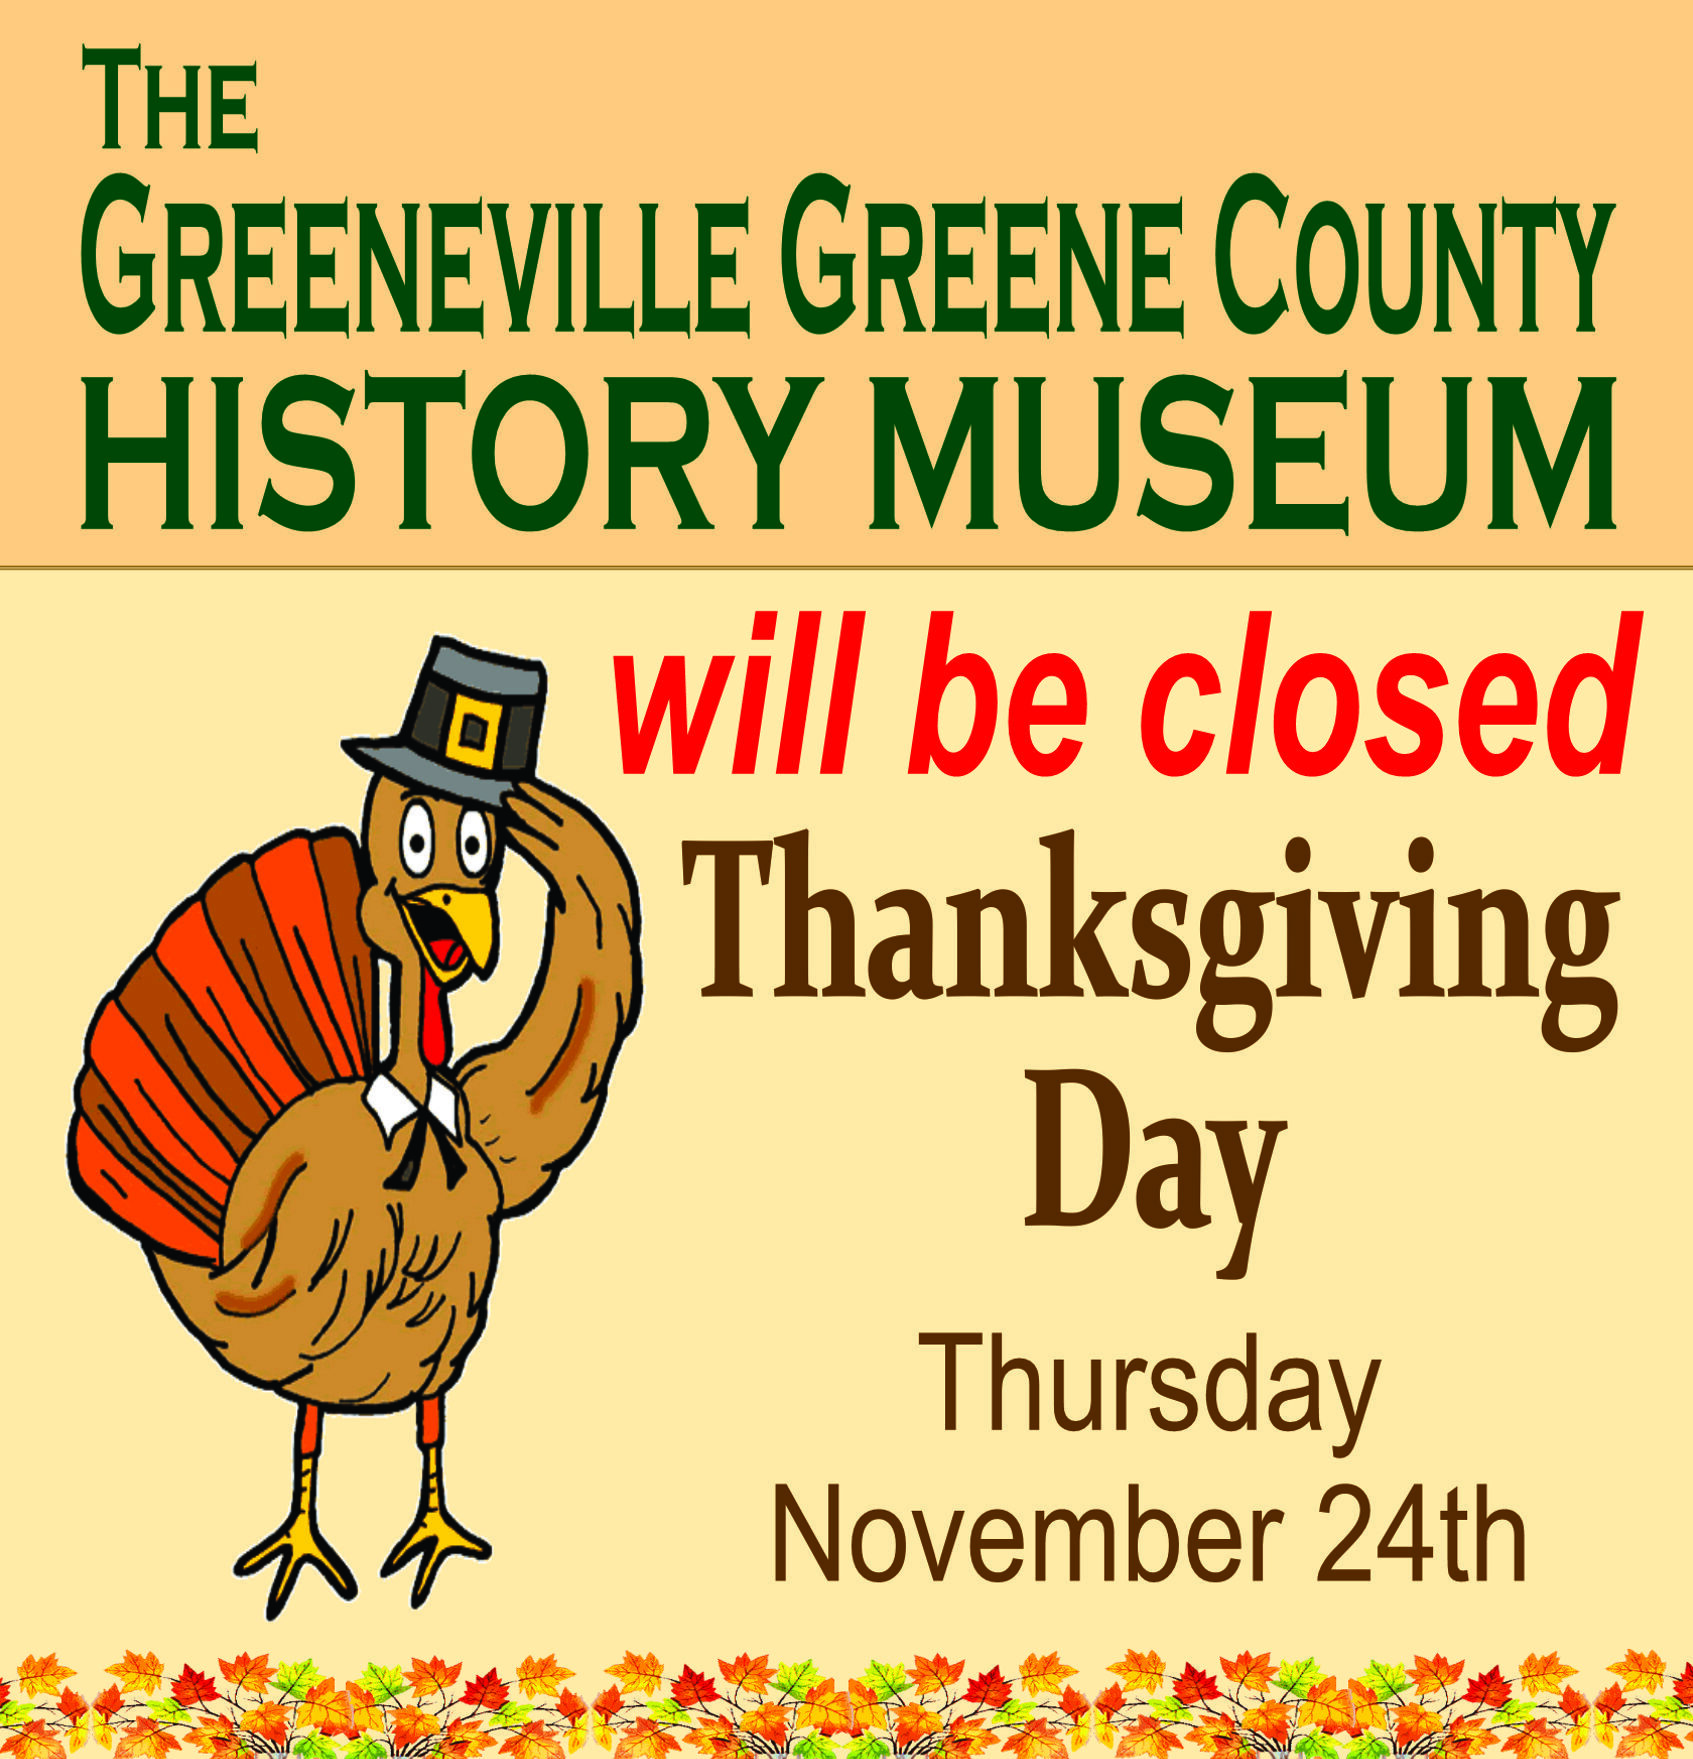 Greeneville/Greene County History Museum